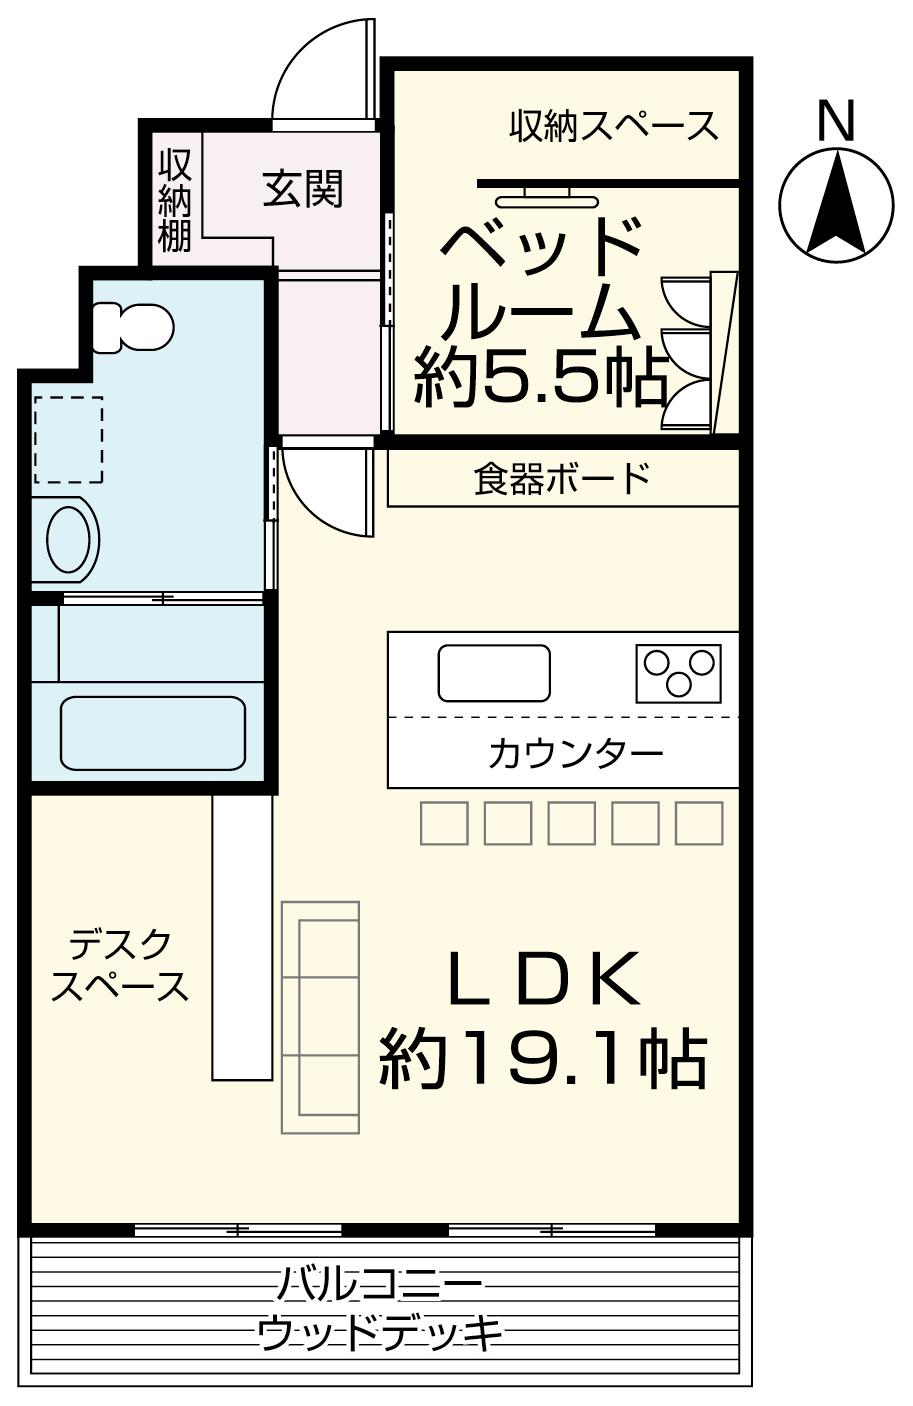 Floor plan. 1LDK, Price 11.8 million yen, Occupied area 51.76 sq m , Balcony area 8.1 sq m